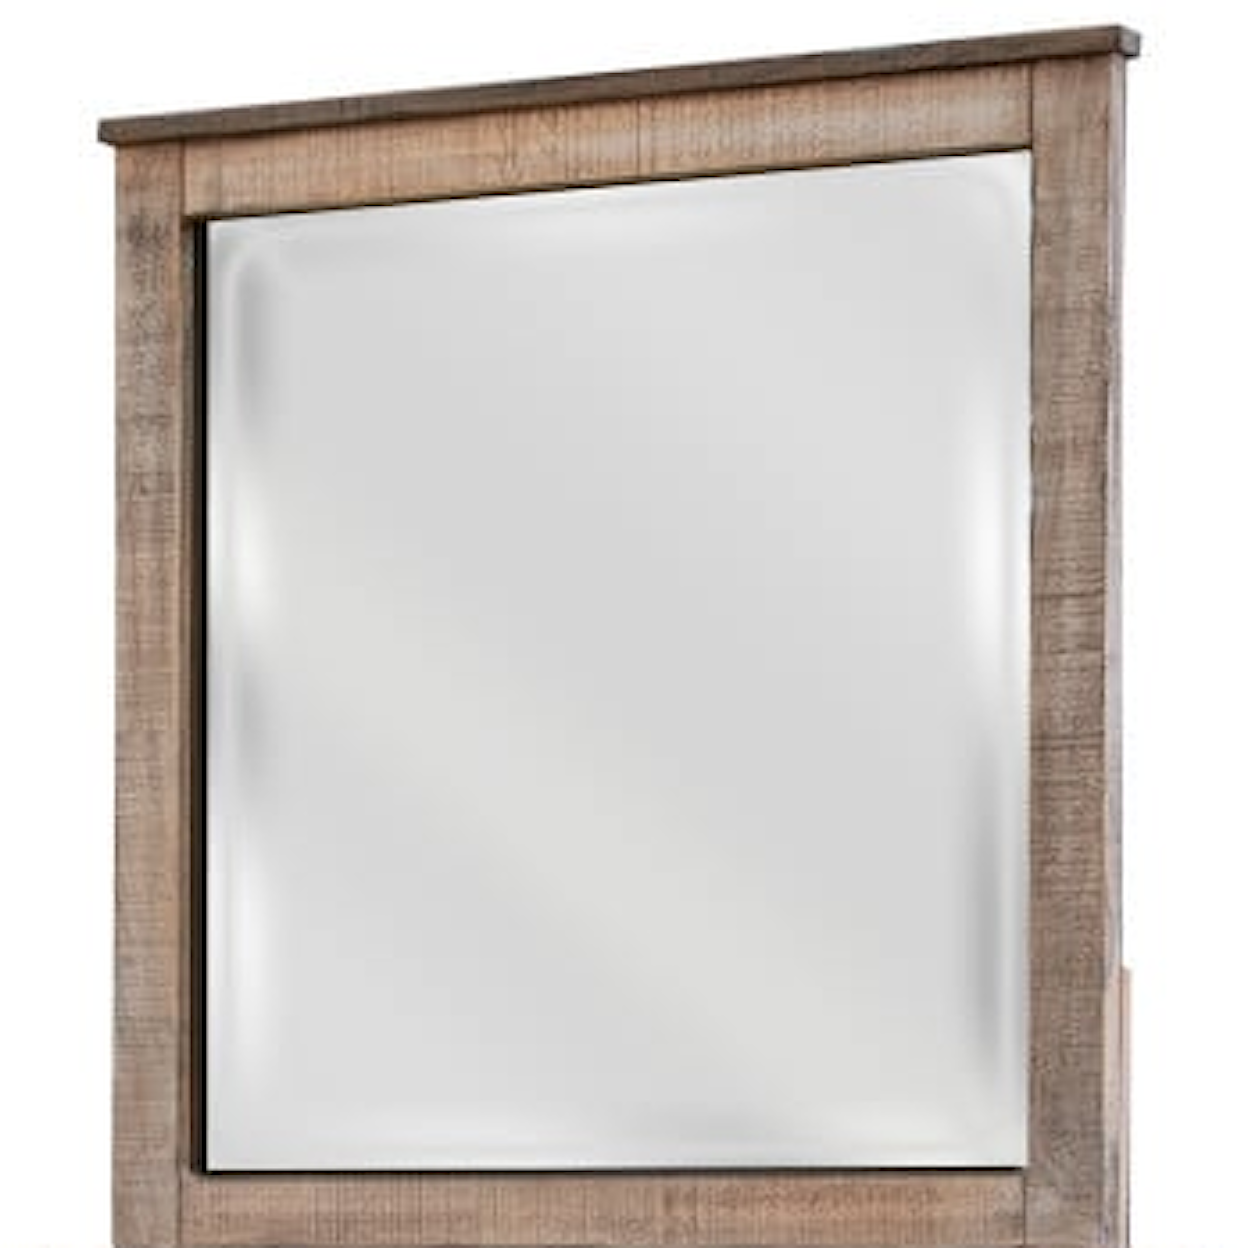 VFM Signature Comala Dresser Mirror with Natural Wooden Trim